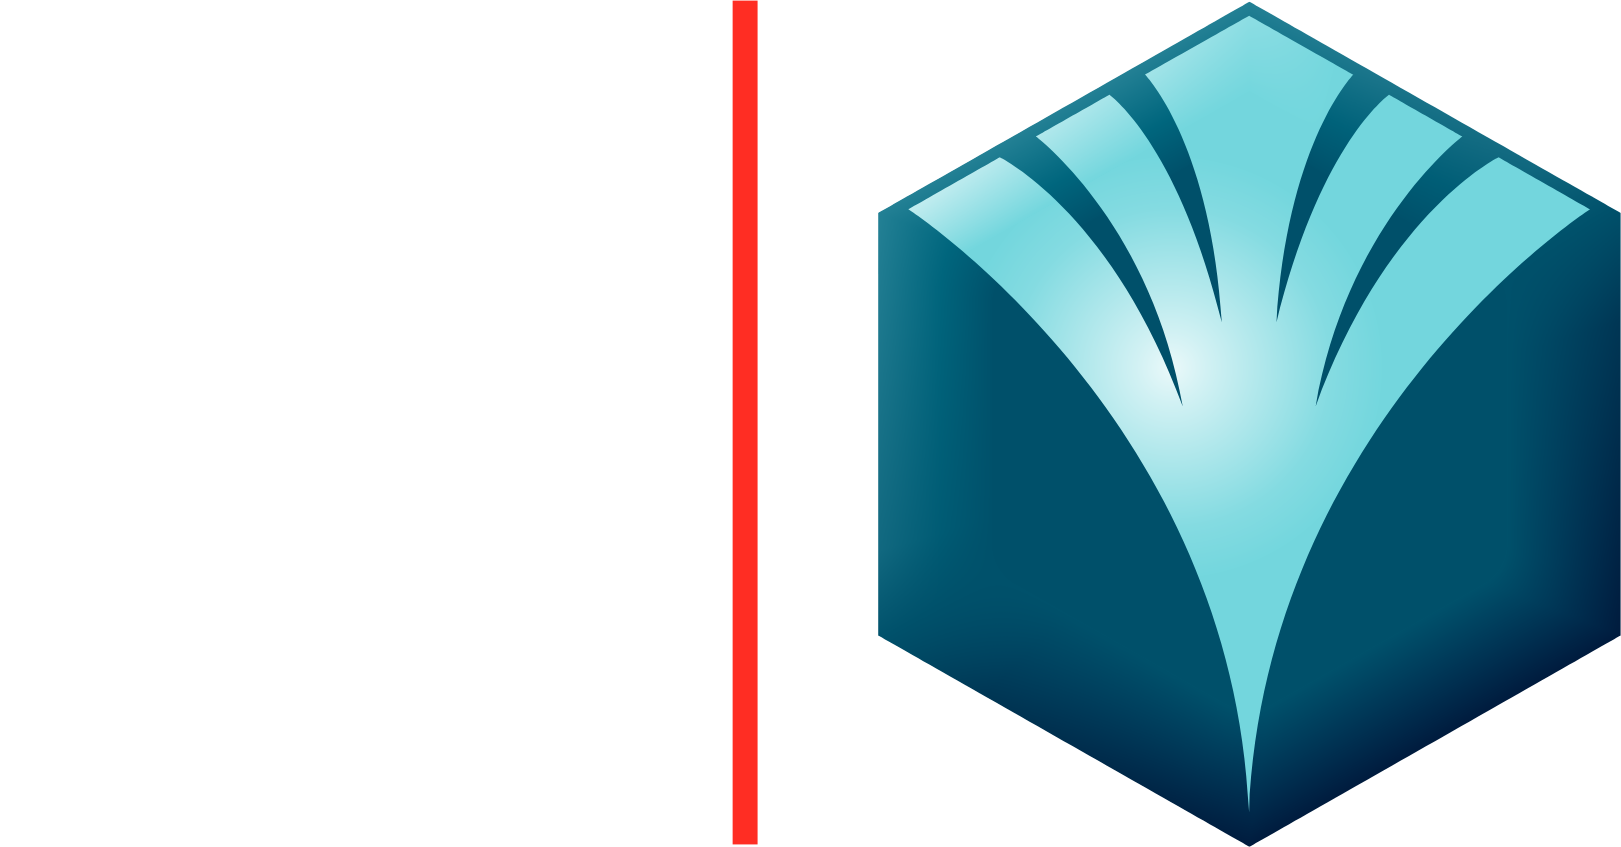 Banque Saudi Fransi logo grand pour les fonds sombres (PNG transparent)